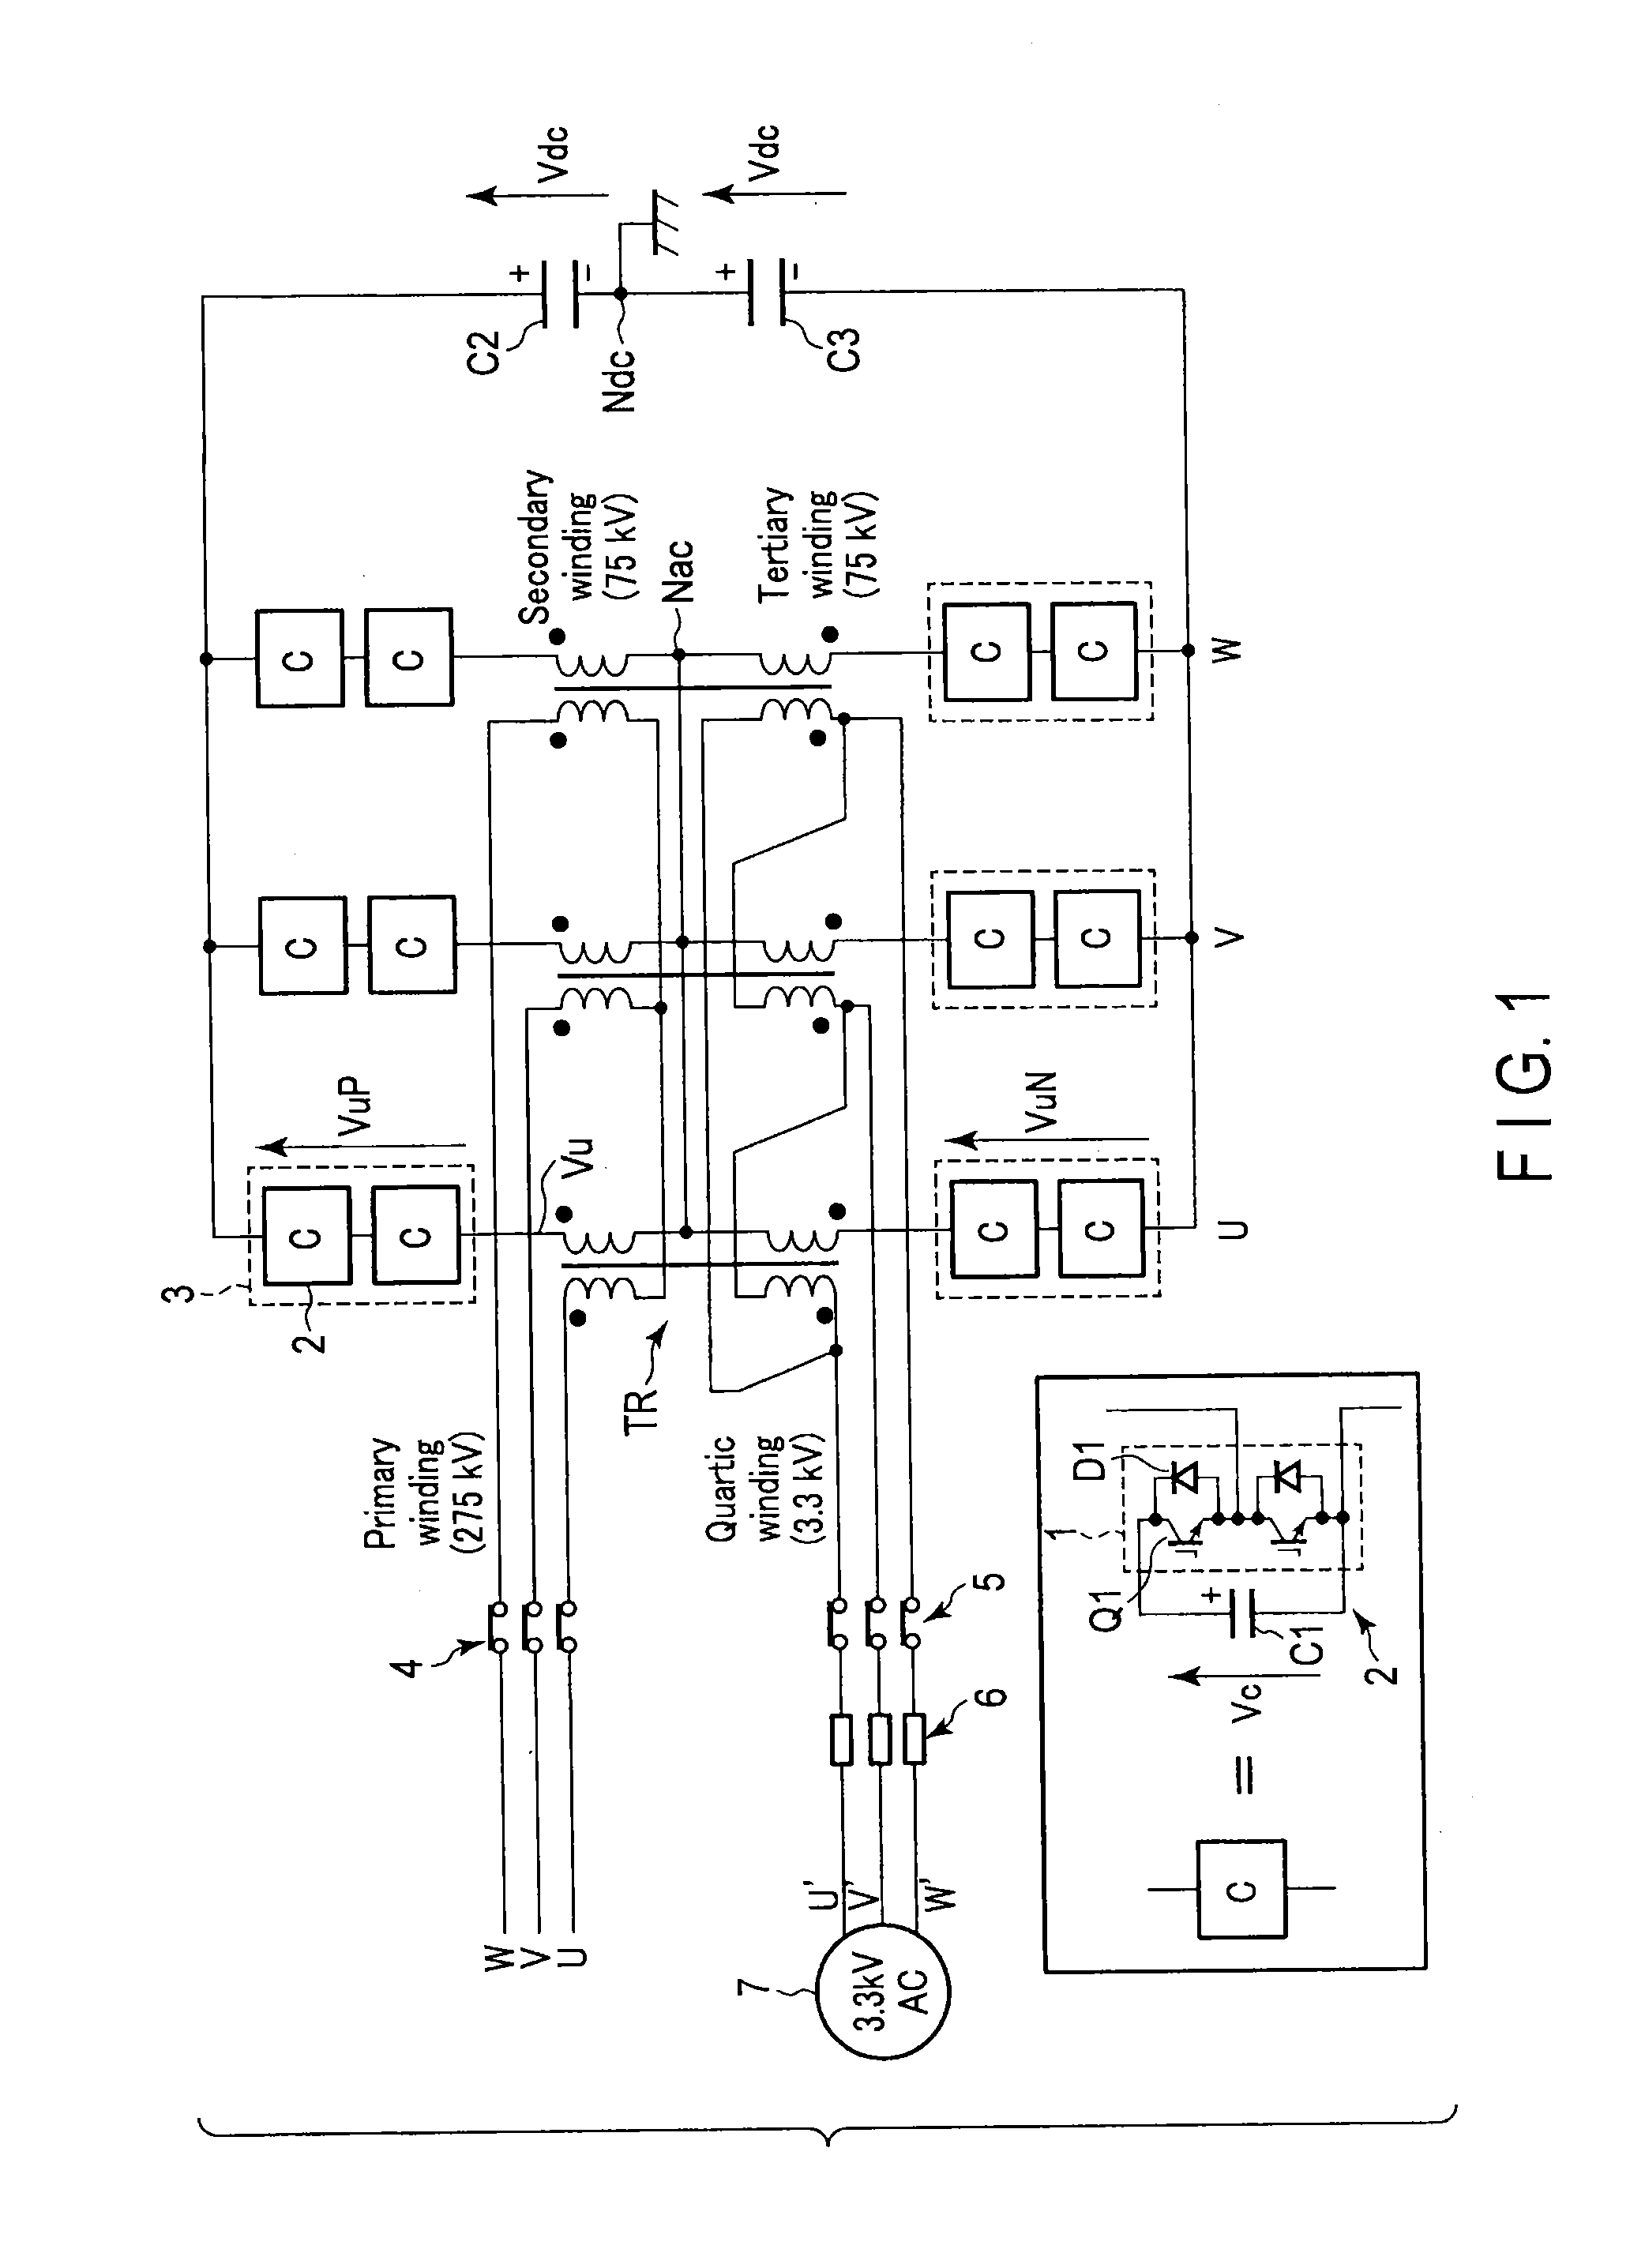 Electric power conversion apparatus